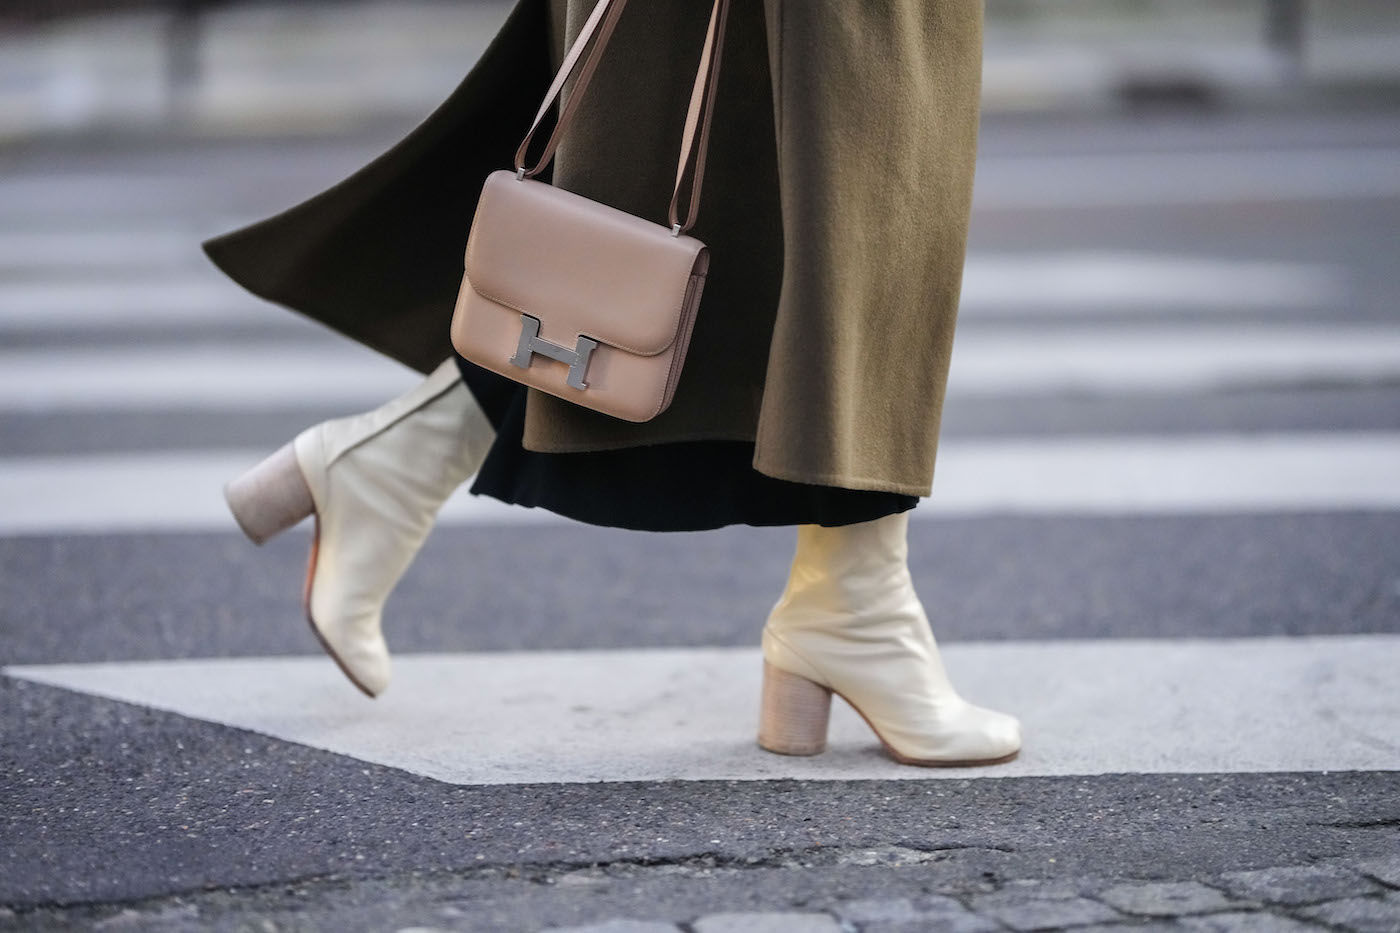 Balenciaga Handbags: Hermes Constance Bag in celebrities' life